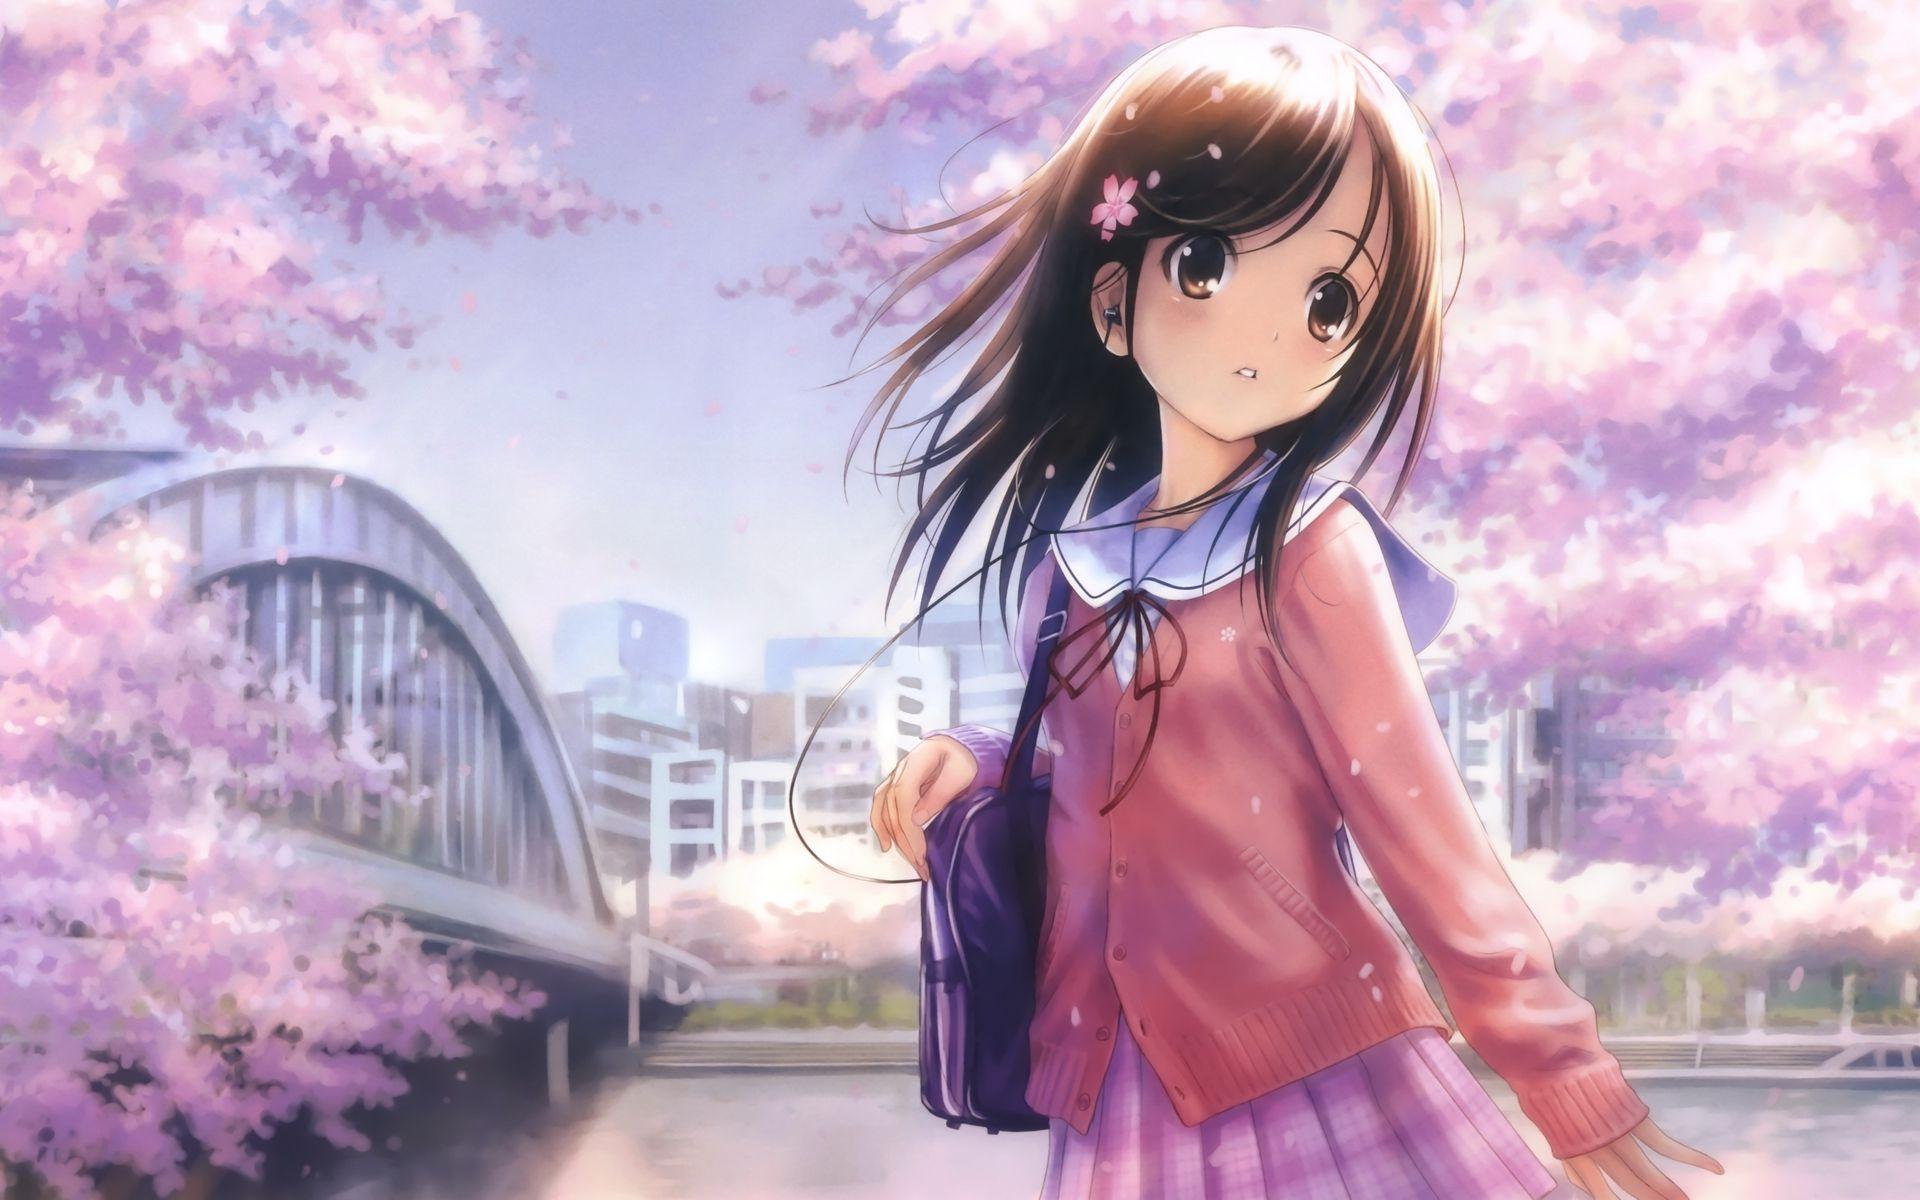 Free Desktop Wallpapers Backgrounds Cute Anime Girl Wallpapers For Desktop Kulturaupice